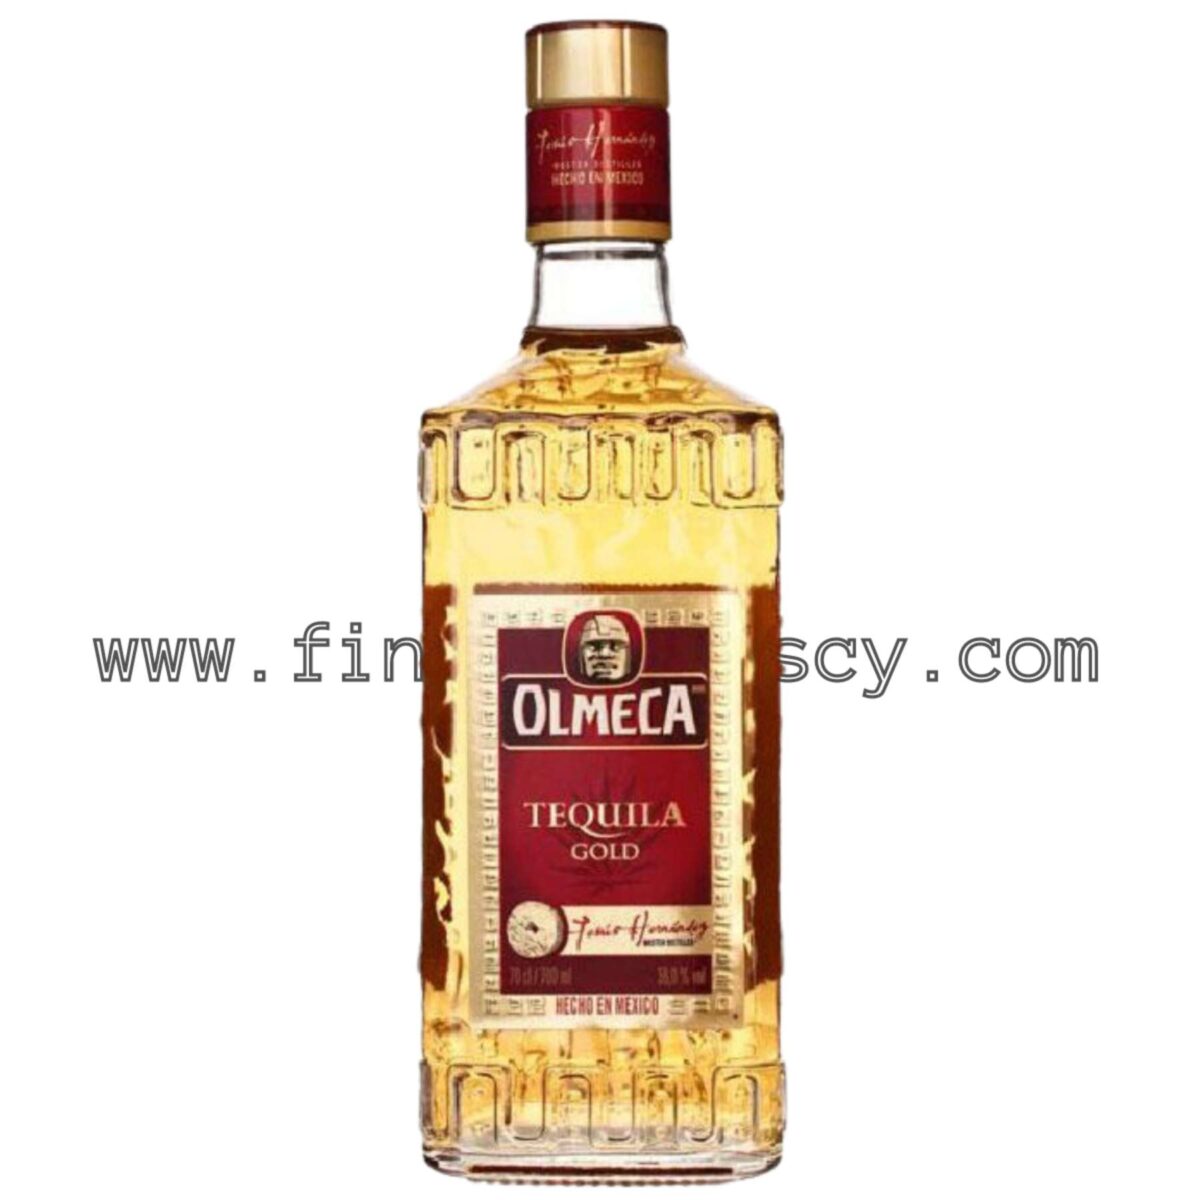 Olmeca Gold 70cl Tequila 700ml 0.7L FSCY Agave Cyprus Price